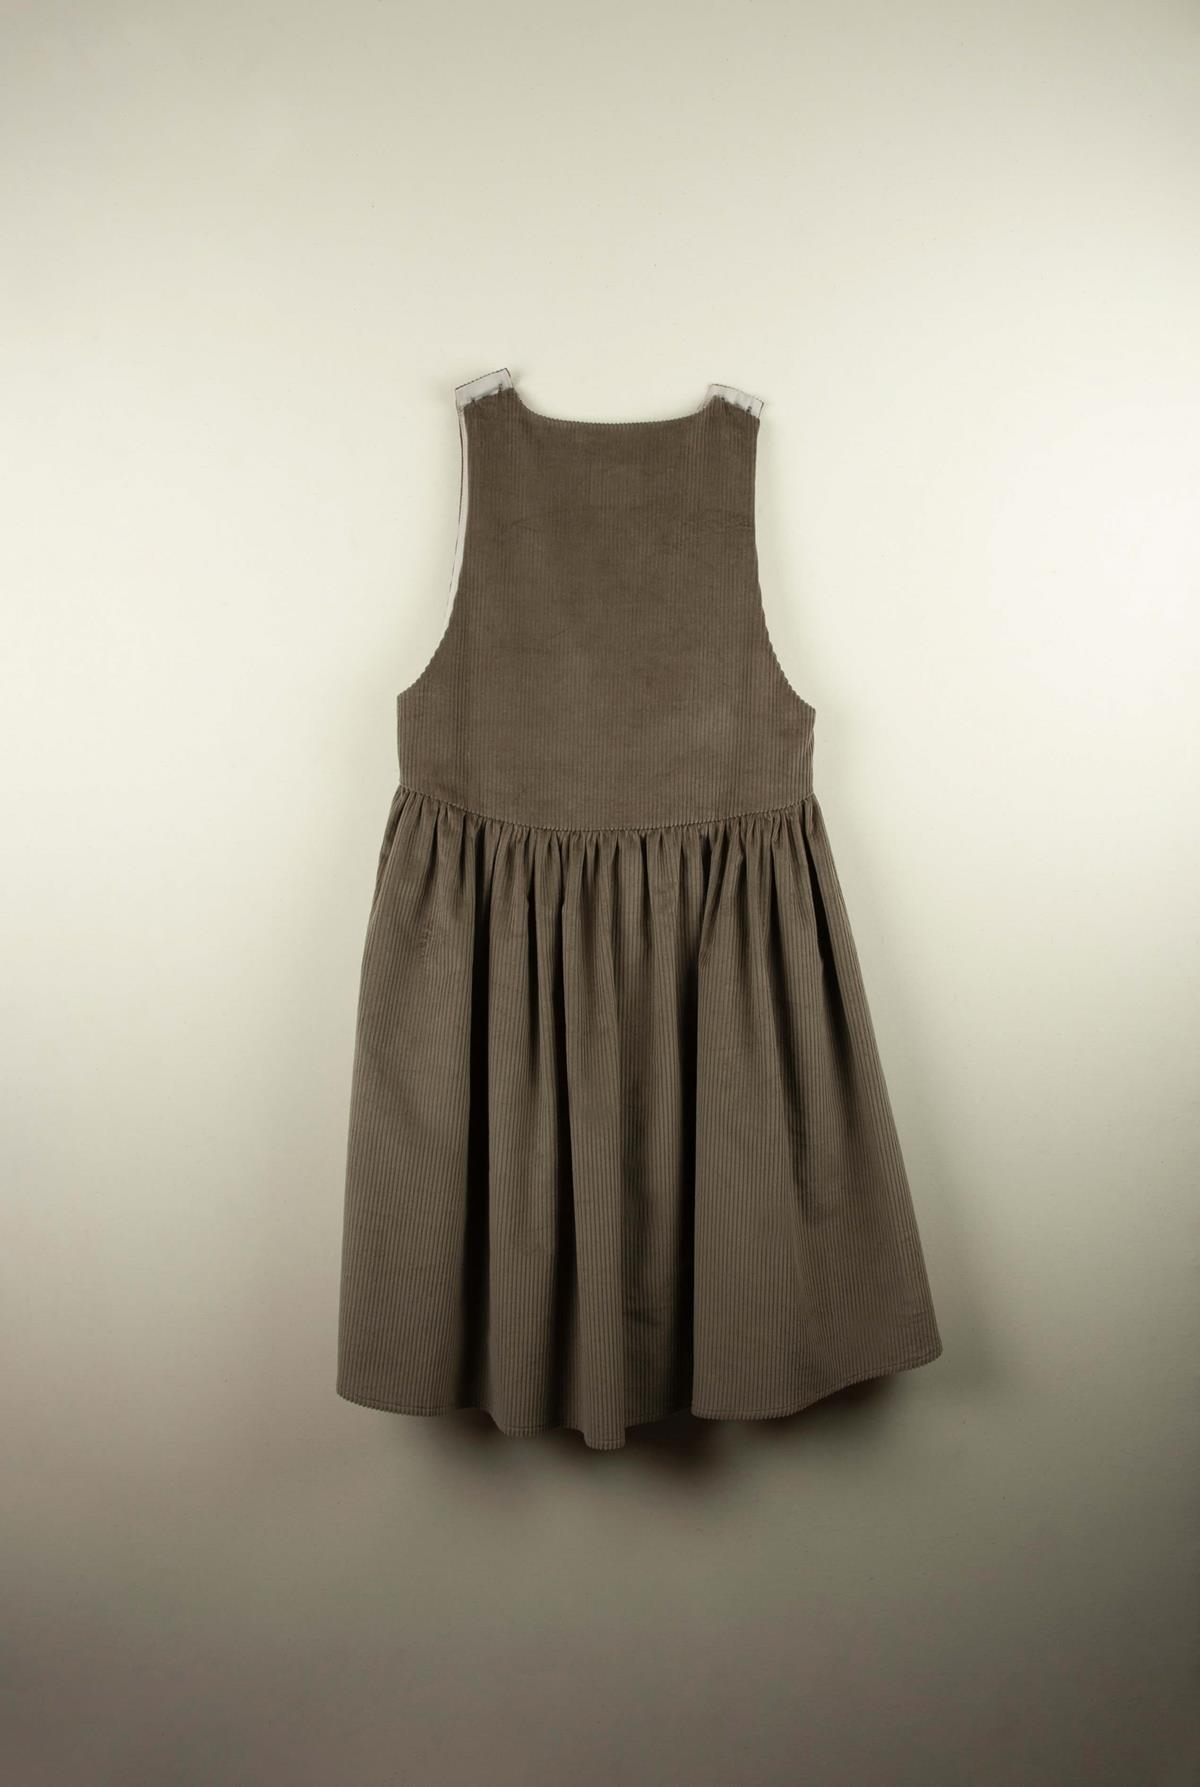 Mod.30.2 Taupe sleeveless dress | AW21.22 Mod.30.2 Taupe sleeveless dress | 1